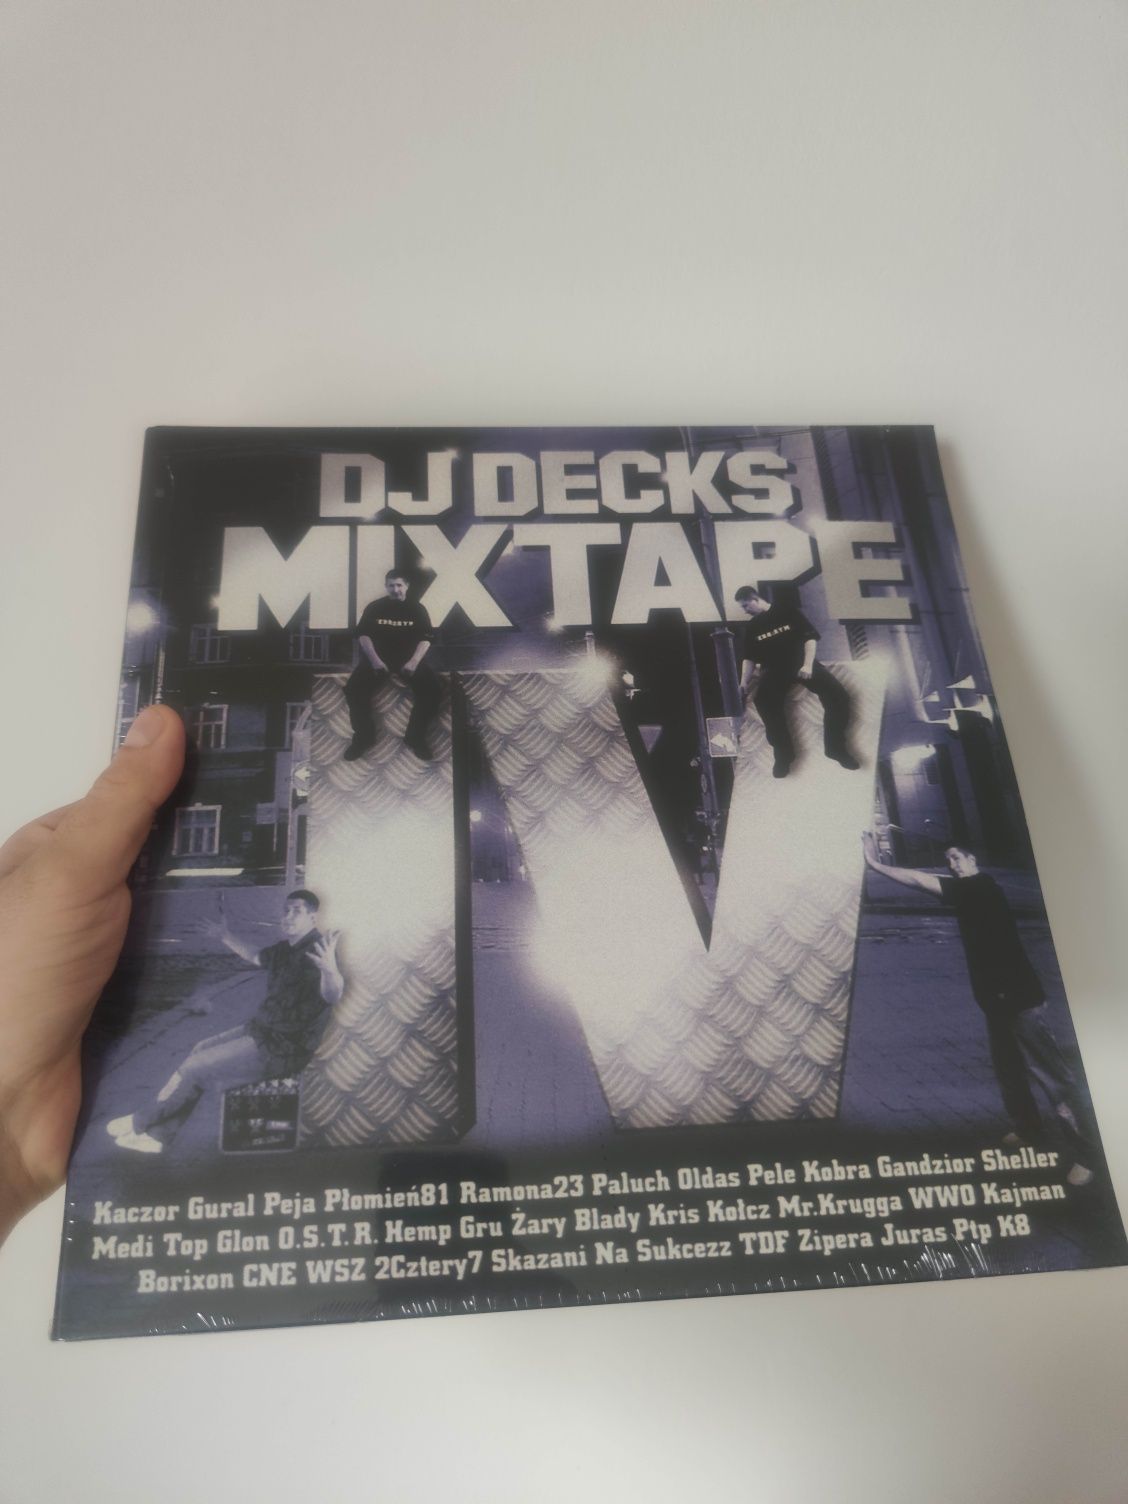 DJ DECKS - Mixtape Vol 4 IV 2LP vinyl nowy w folii Slums Attack PEJA